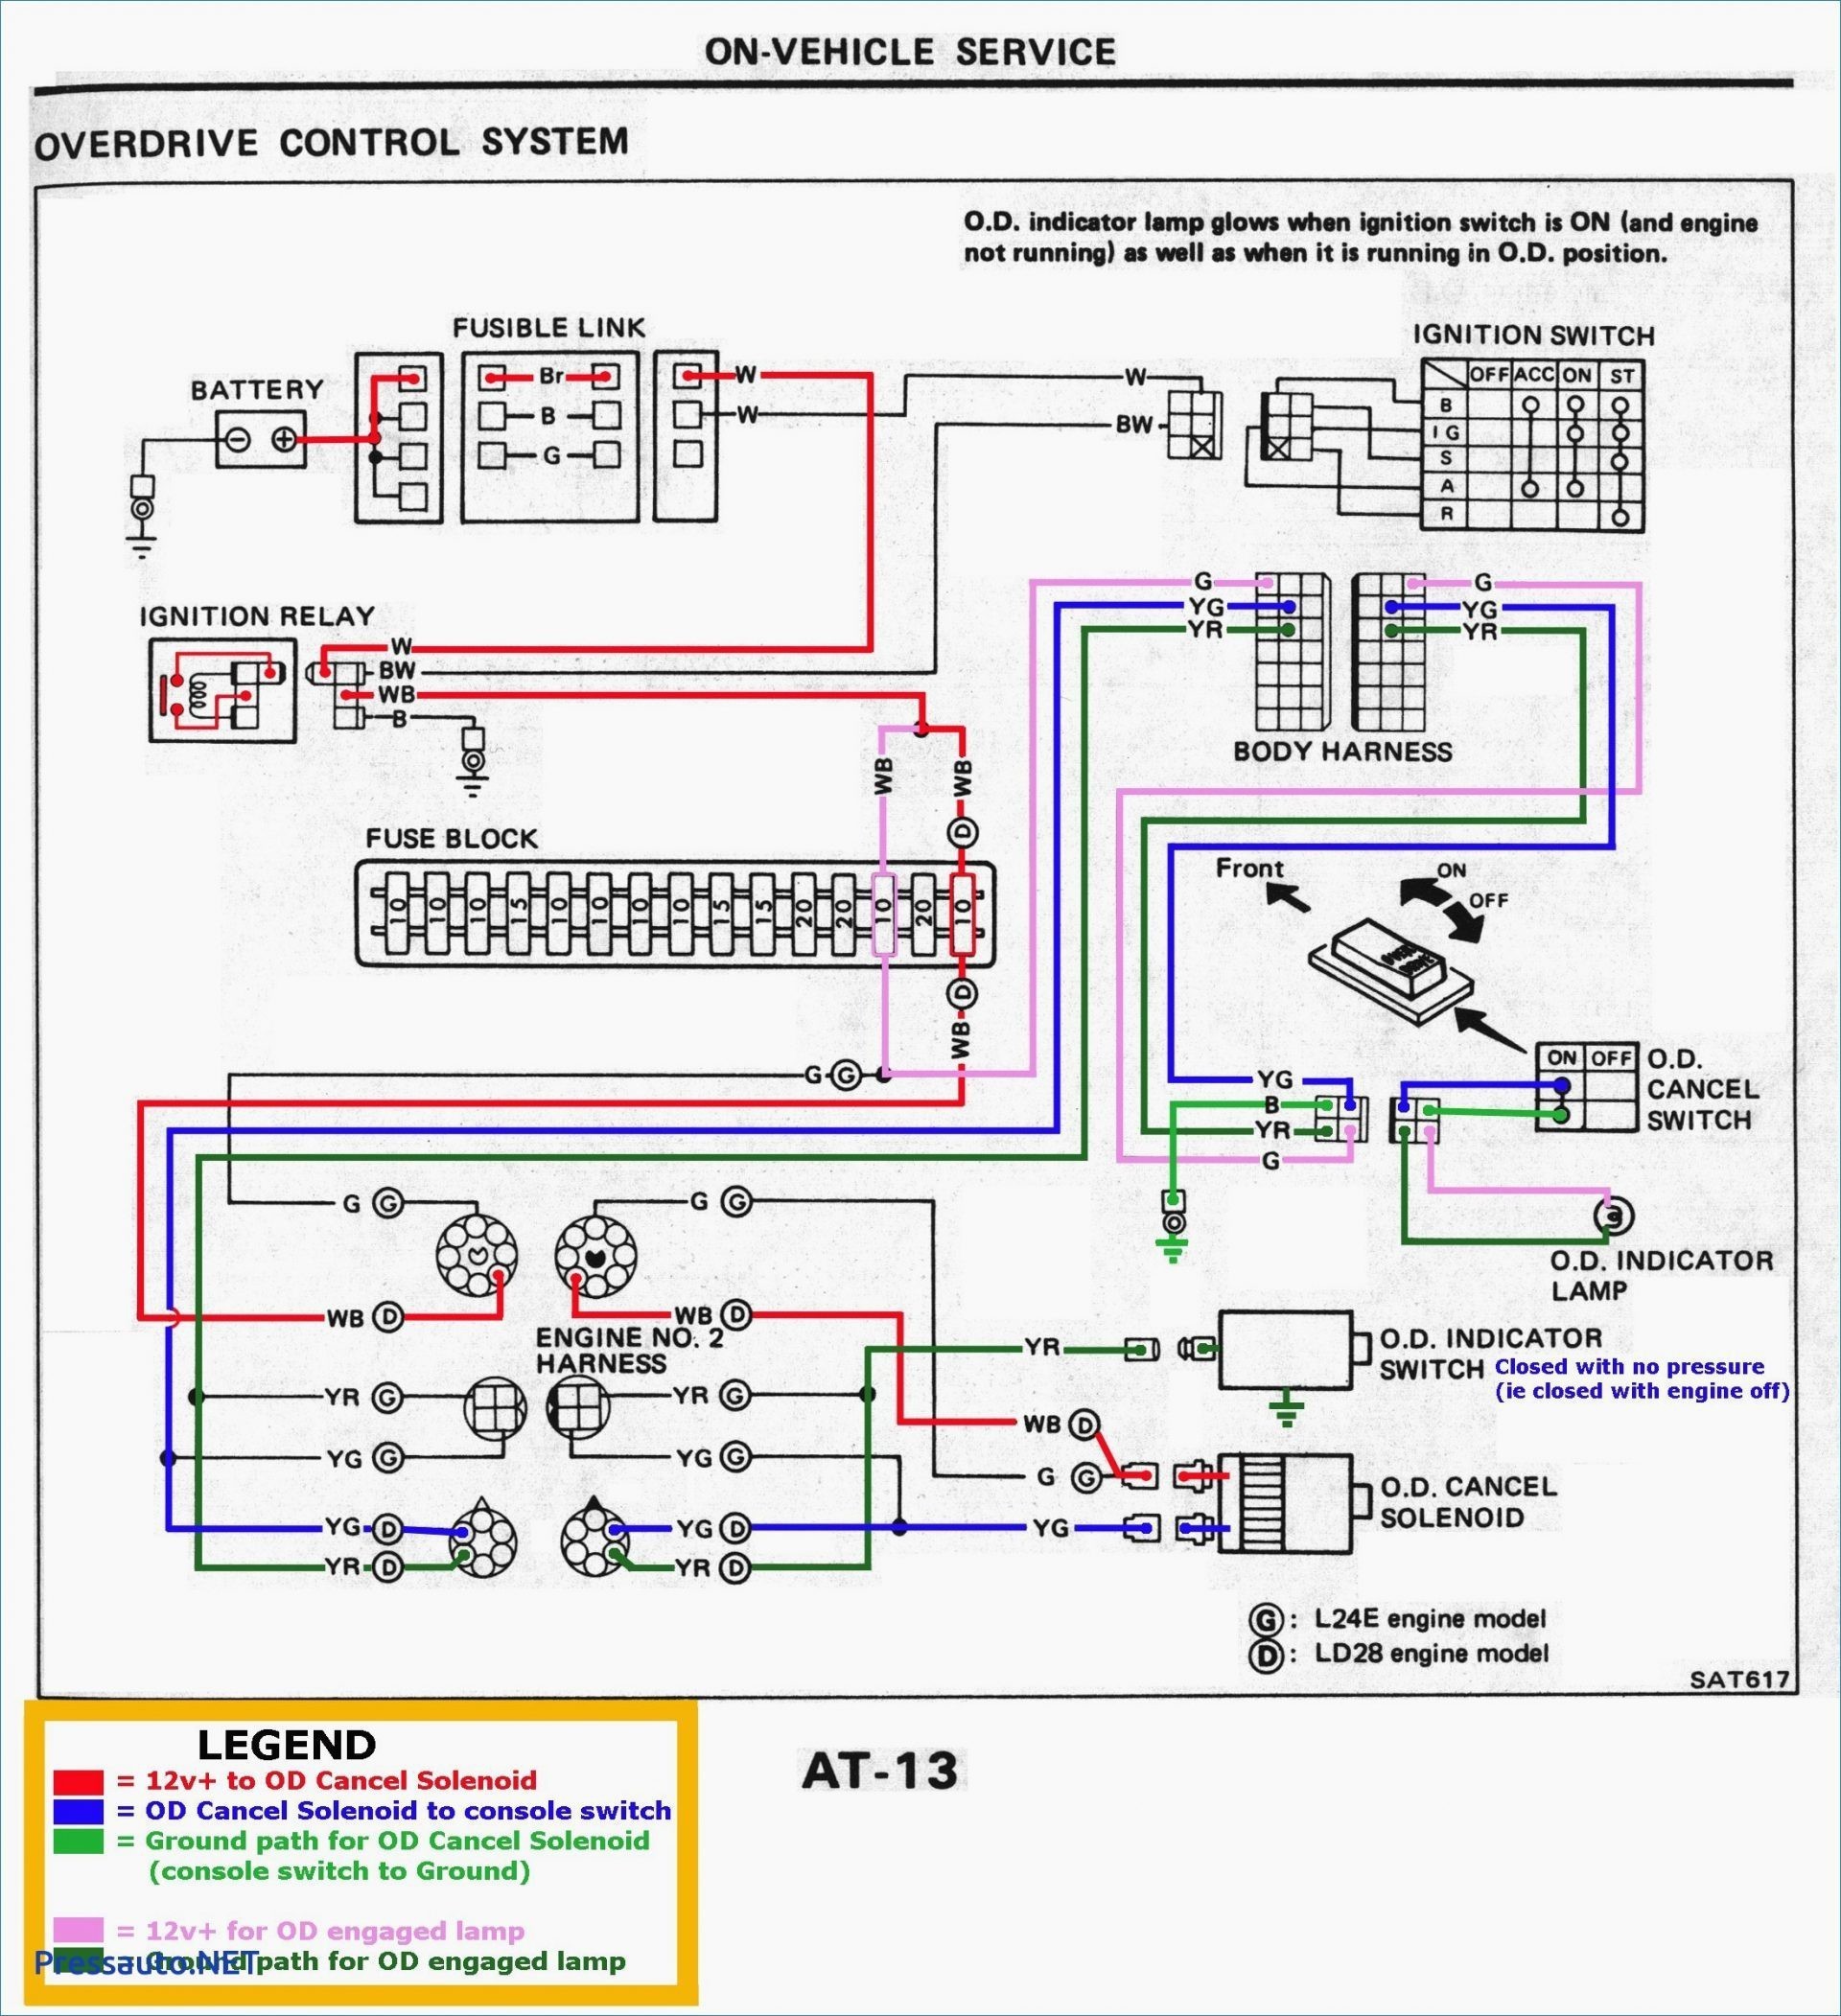 Basic House Wiring Diagram Best House Electrical Wiring Diagram Australia Valid Wiring Diagram Fresh